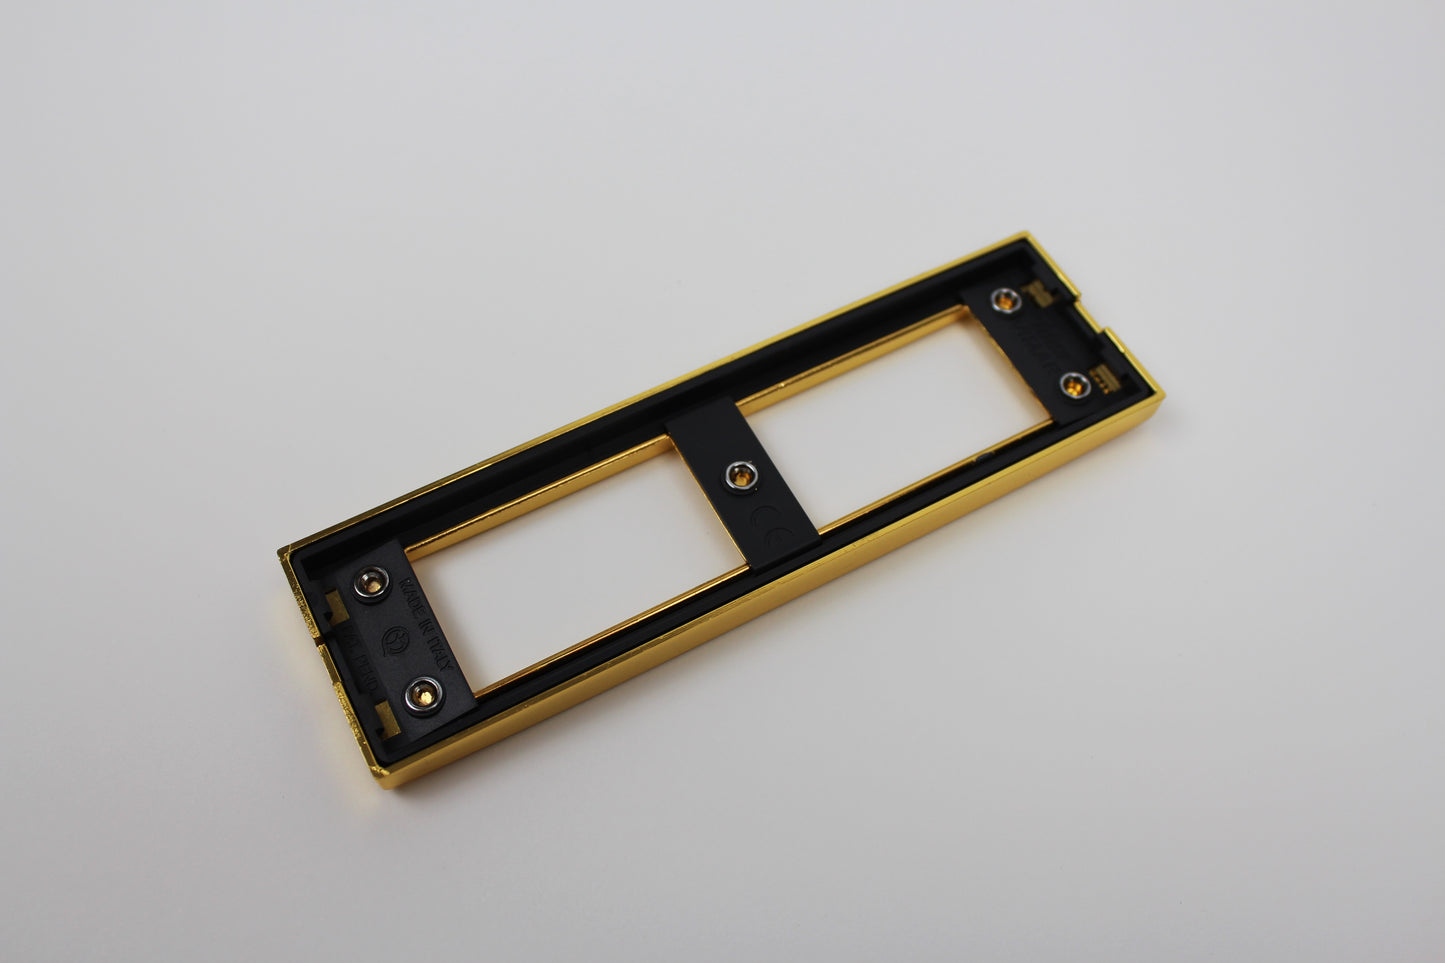 Vimar Classica Cover Plate 2 Module Gold Square Corners